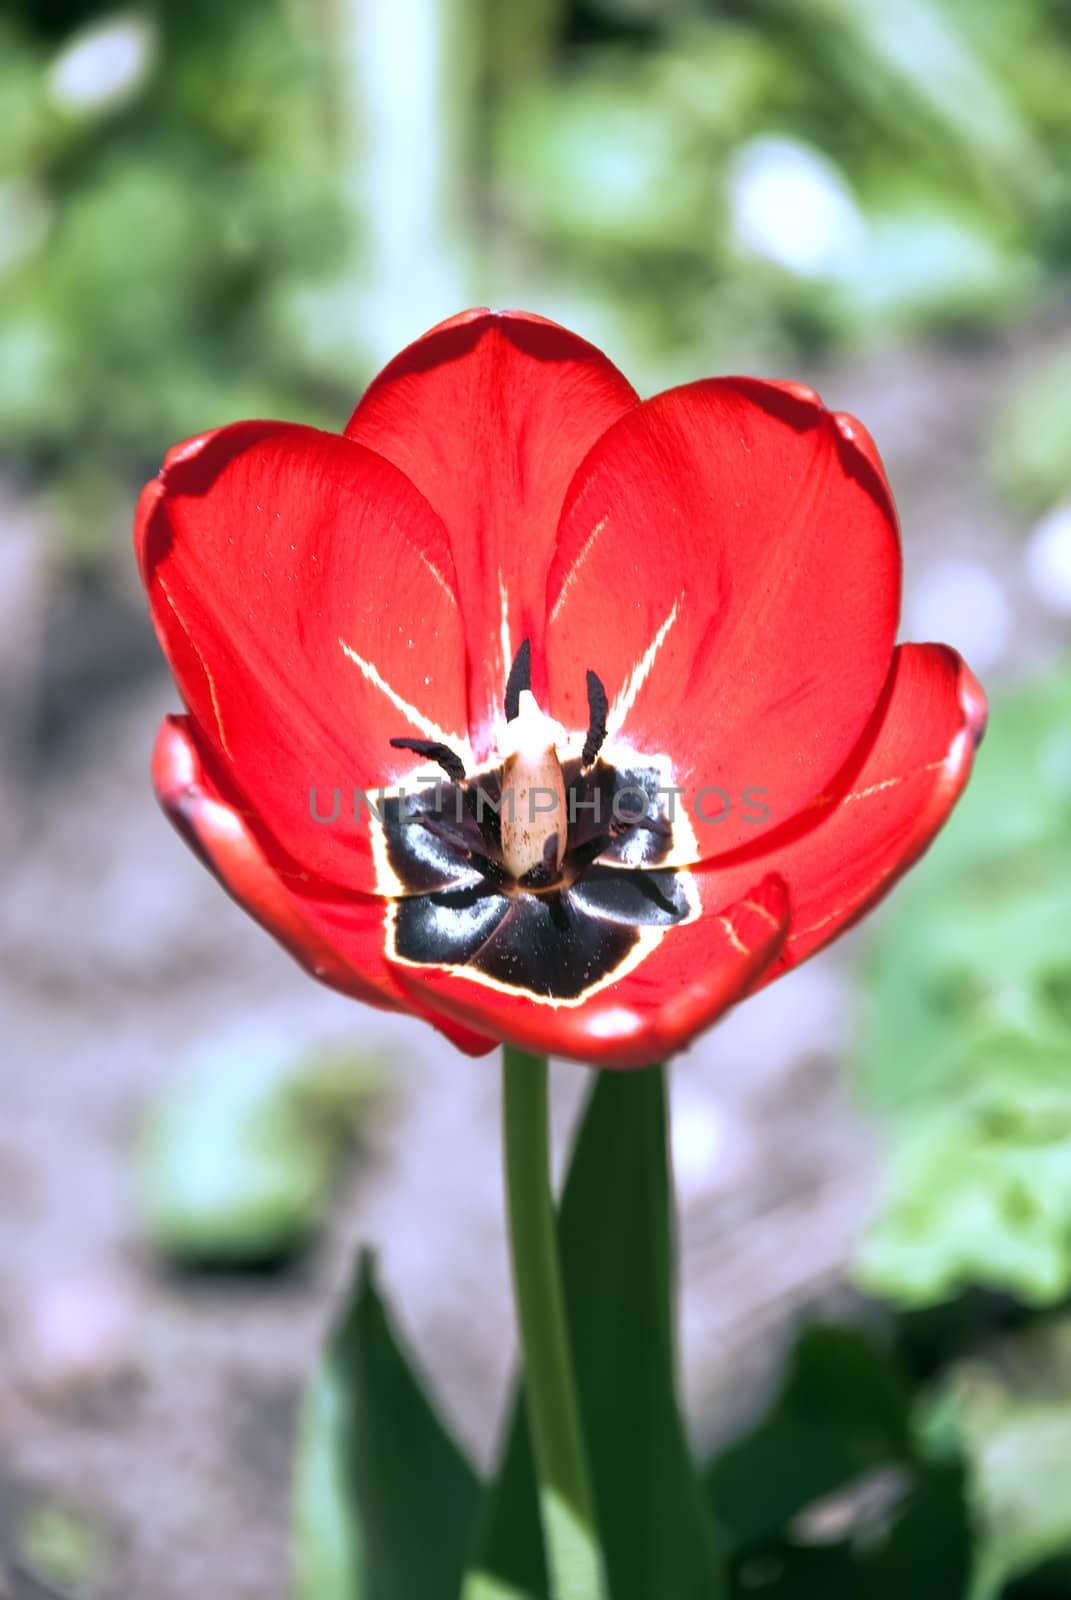 Tulips in garden by negativ